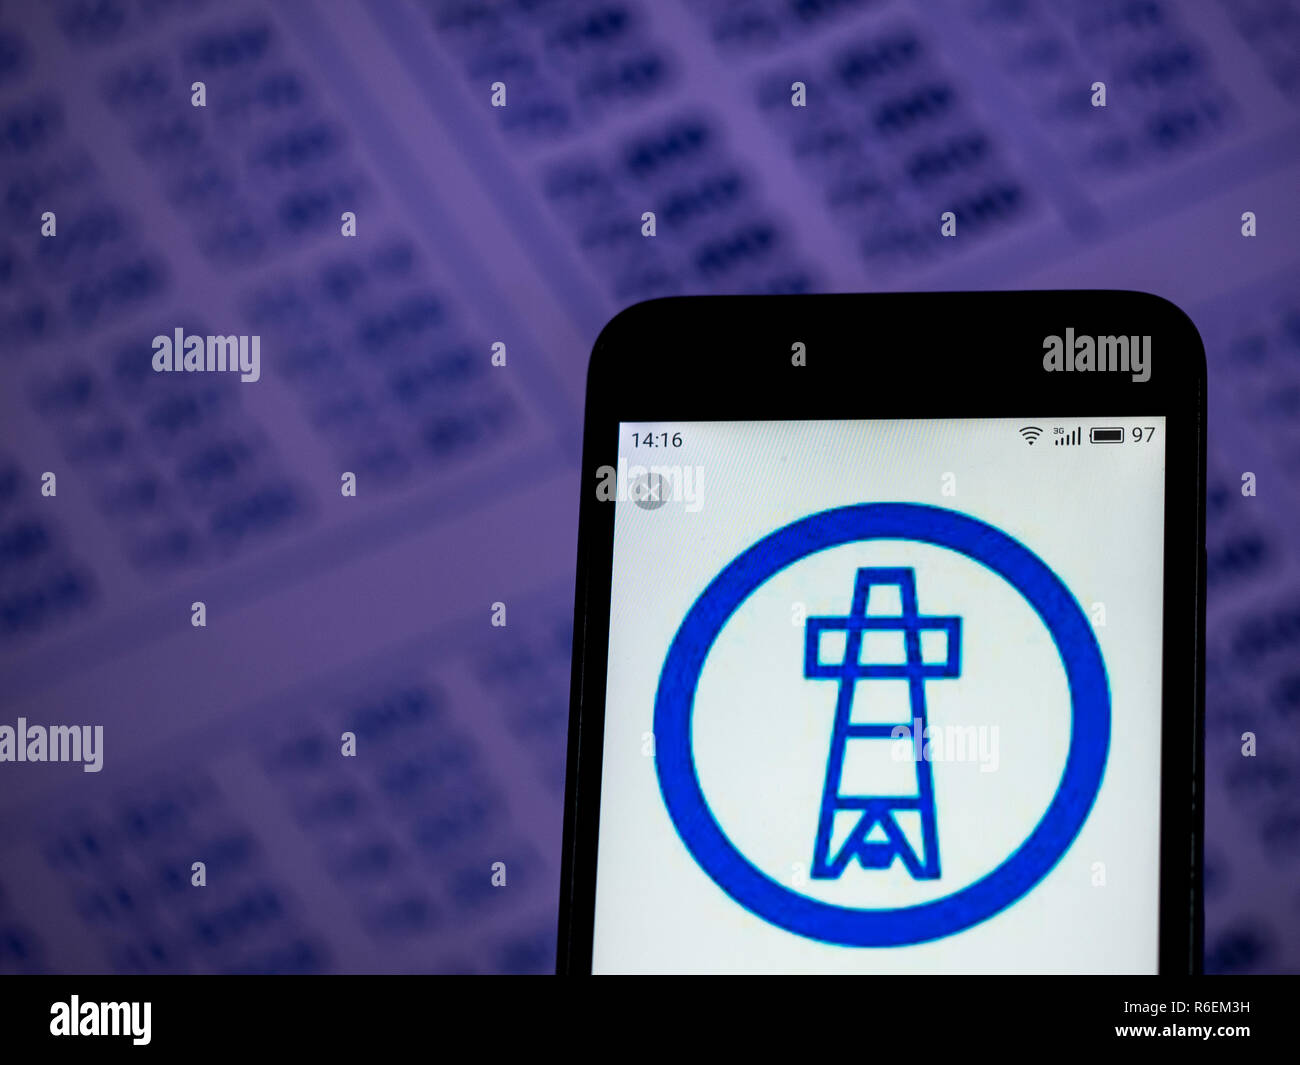 Anadarko Petroleum Corporation  logo seen displayed on smart phone. Stock Photo